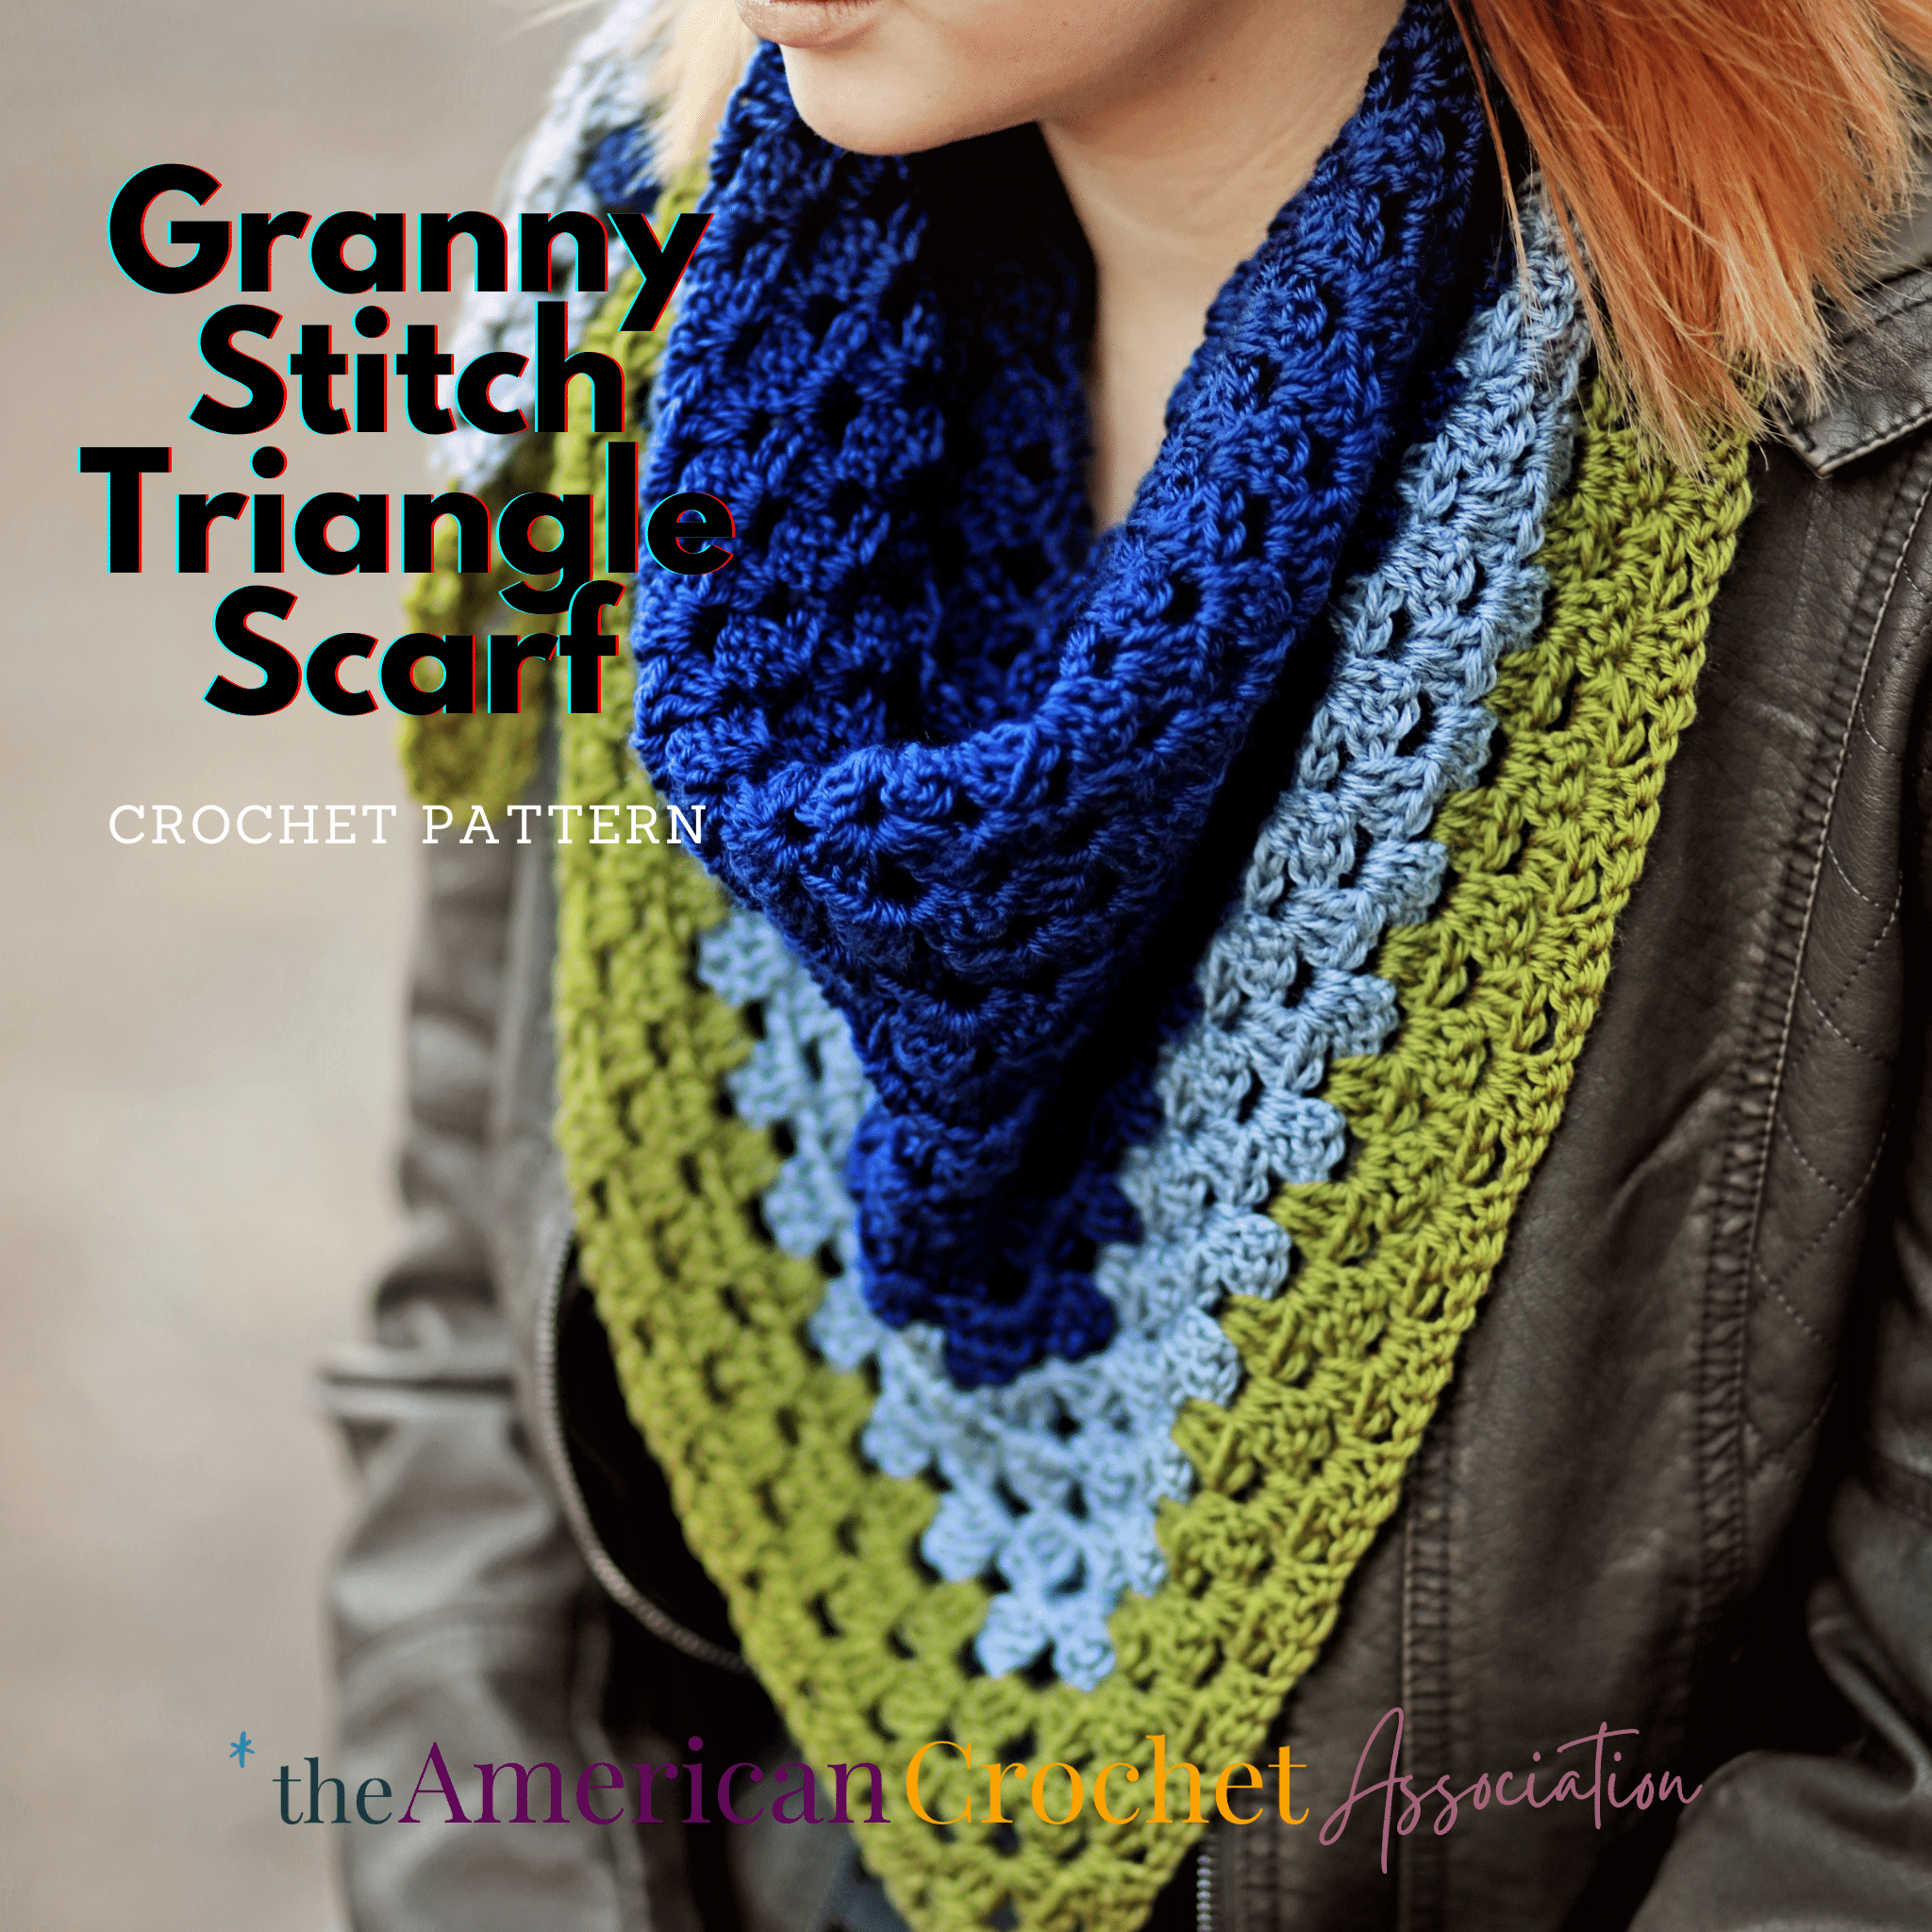 Granny Stitch Triangle Scarf: Crochet Pattern with Stitch Chart